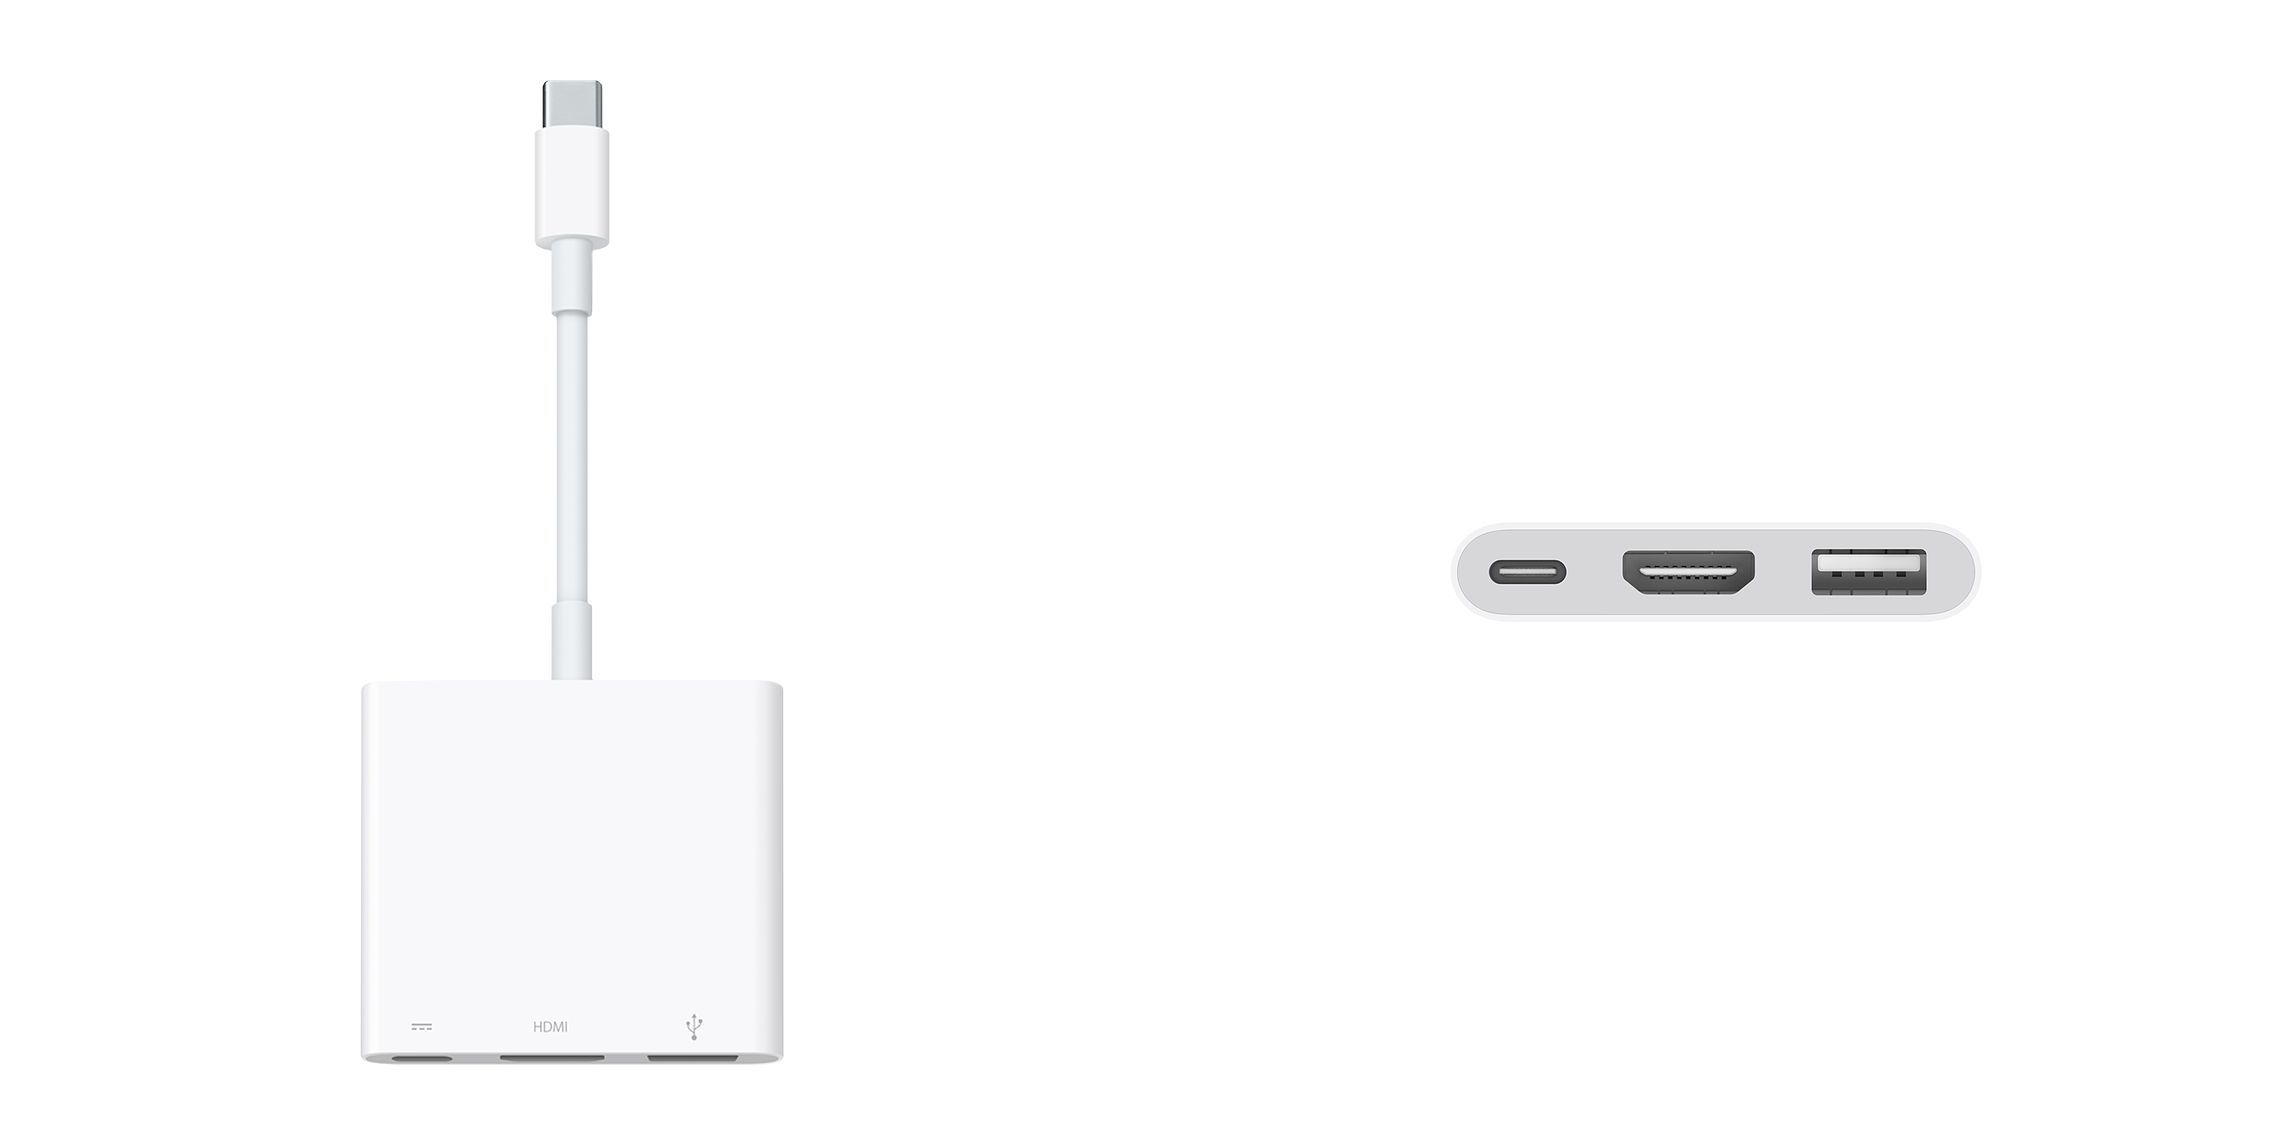 Apple Releases USB-C Digital AV Multiport Adapter with HDMI 2.0 